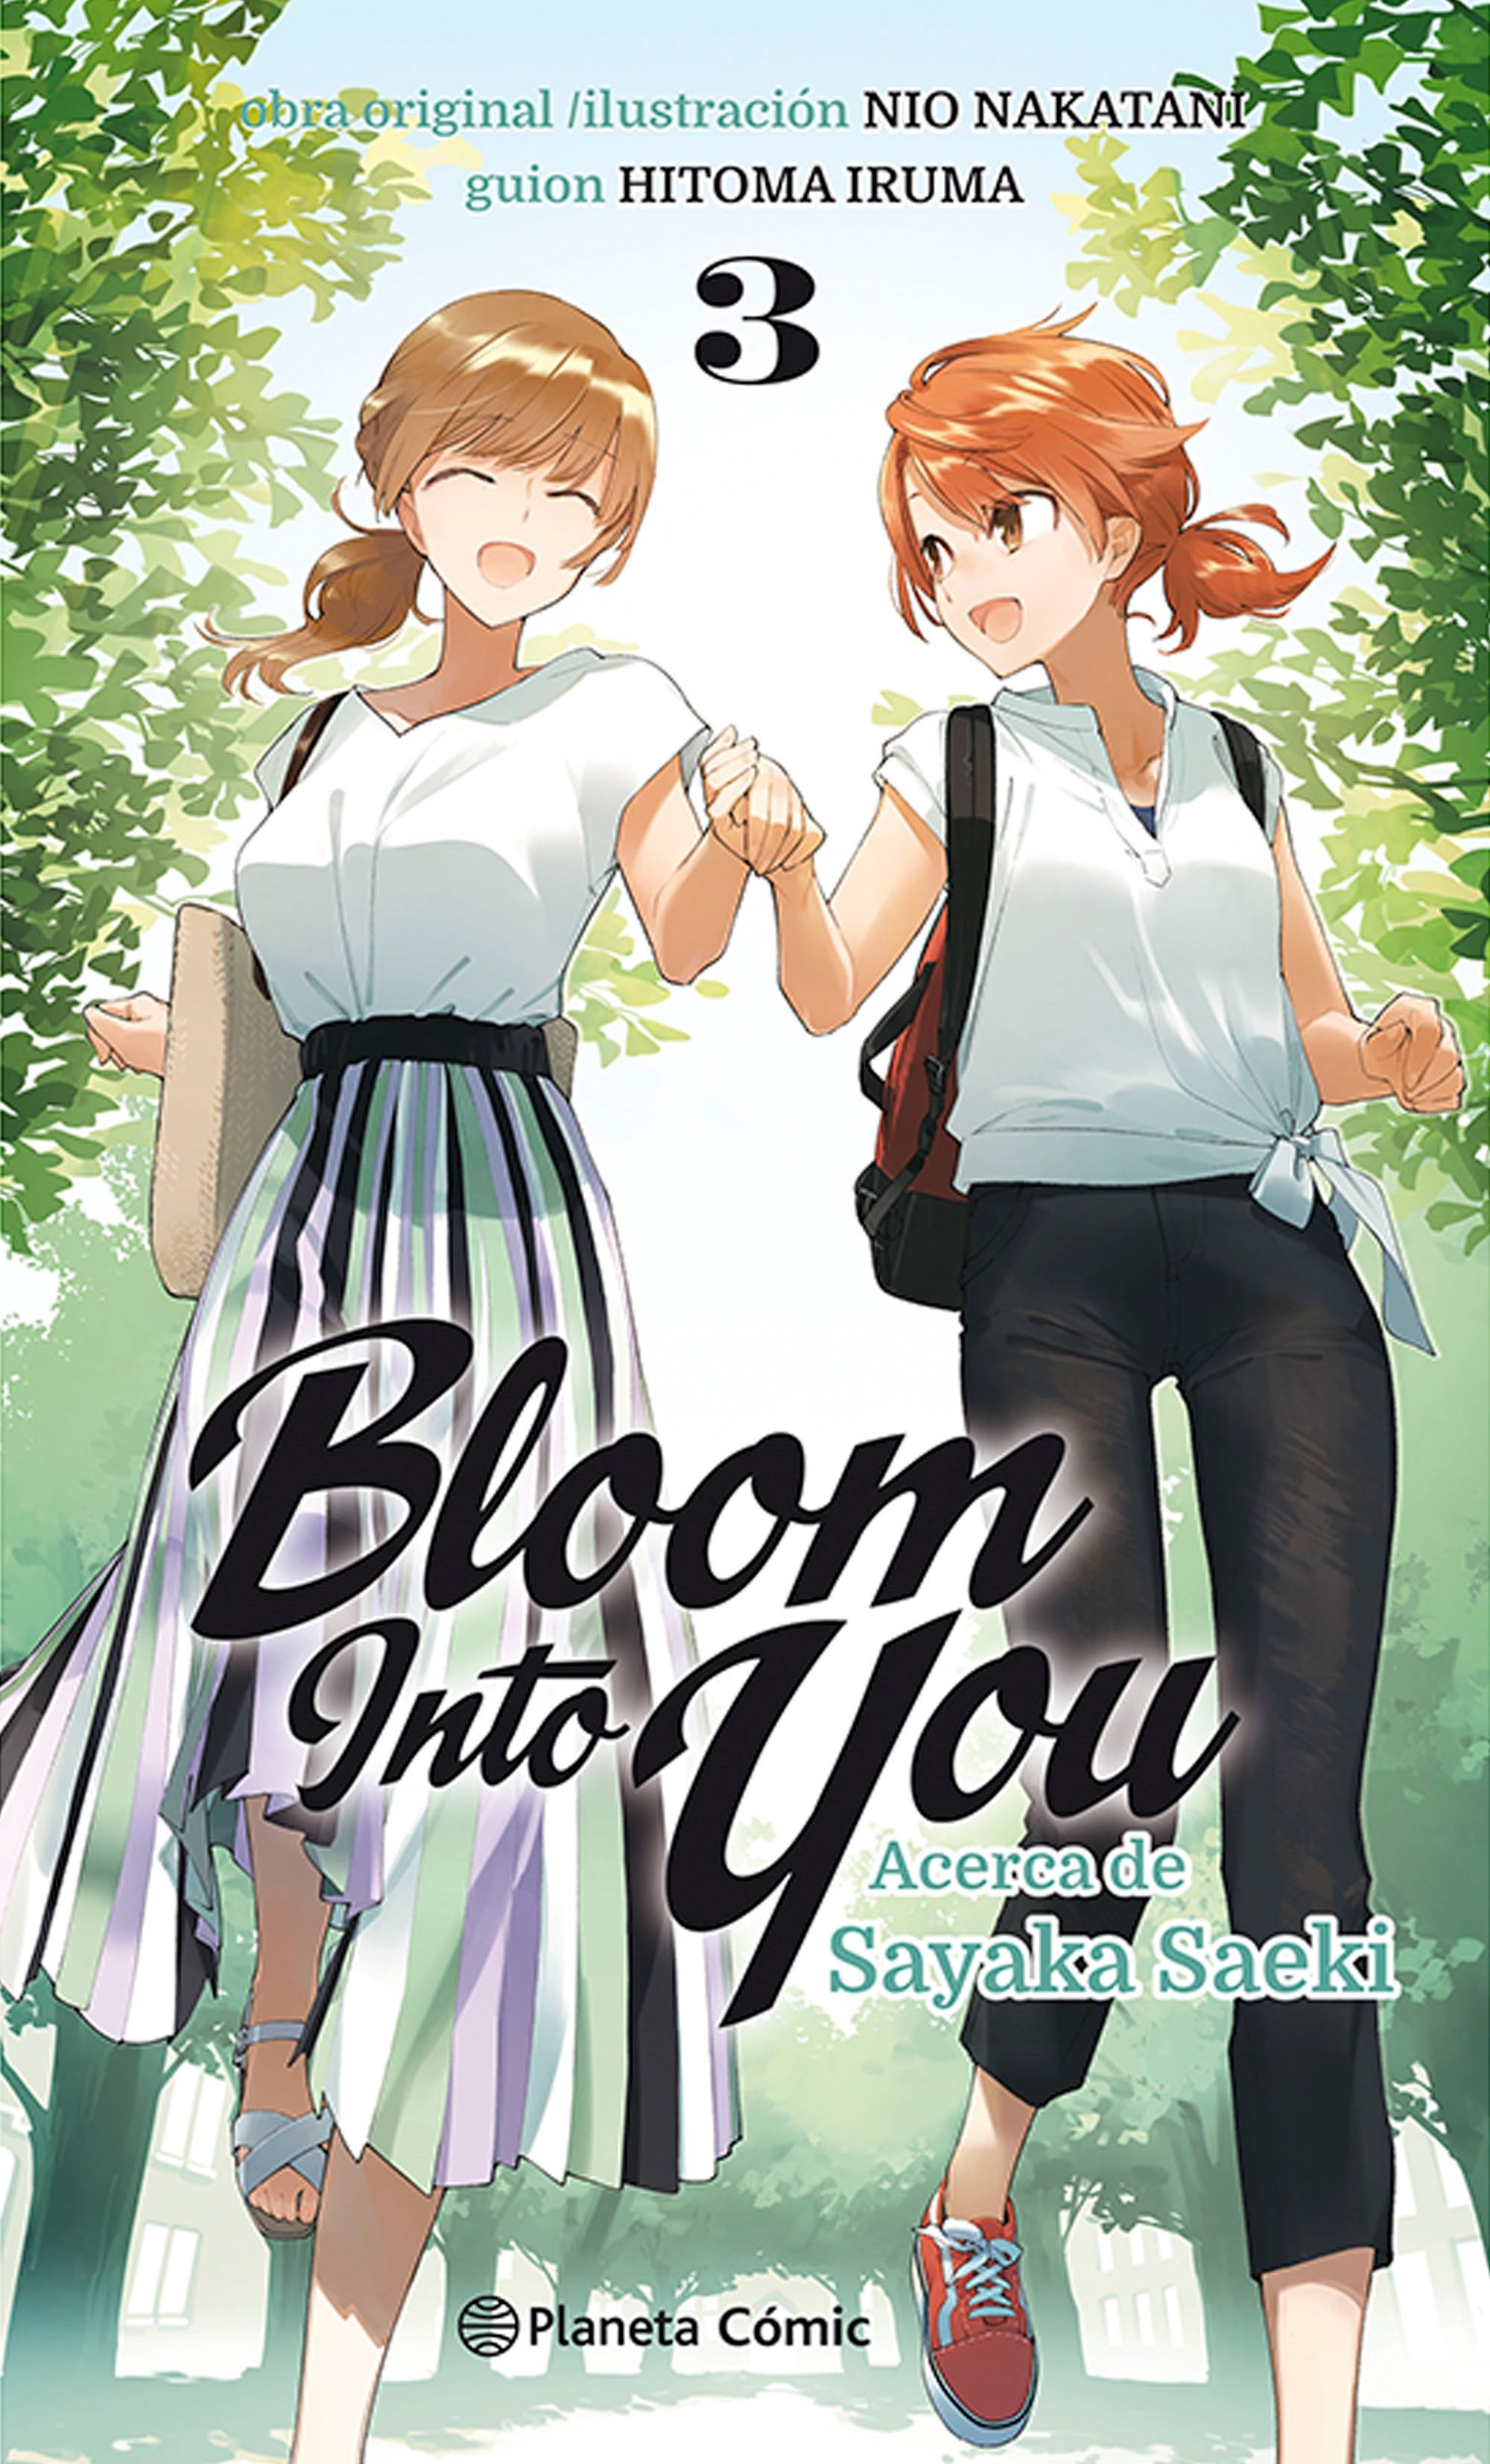 Bloom Into You Antología nº 02 - Nakatani Nio, AA. VV